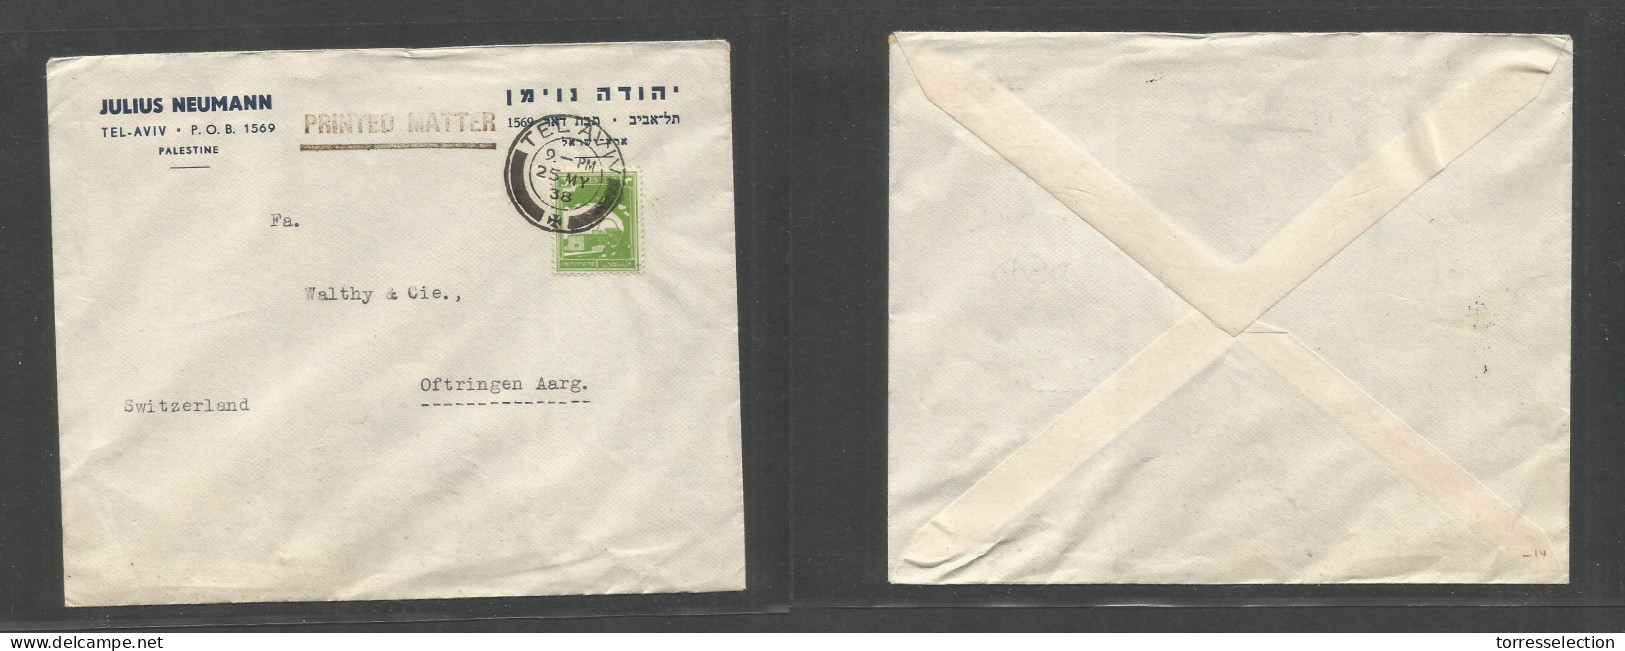 PALESTINE. 1938 (25 May) Tel Aviv - Switzerland, Oftringen Aargan. PM Rate Unsealed Comercial Bilingual Fkd Env, Cds. VF - Palestina